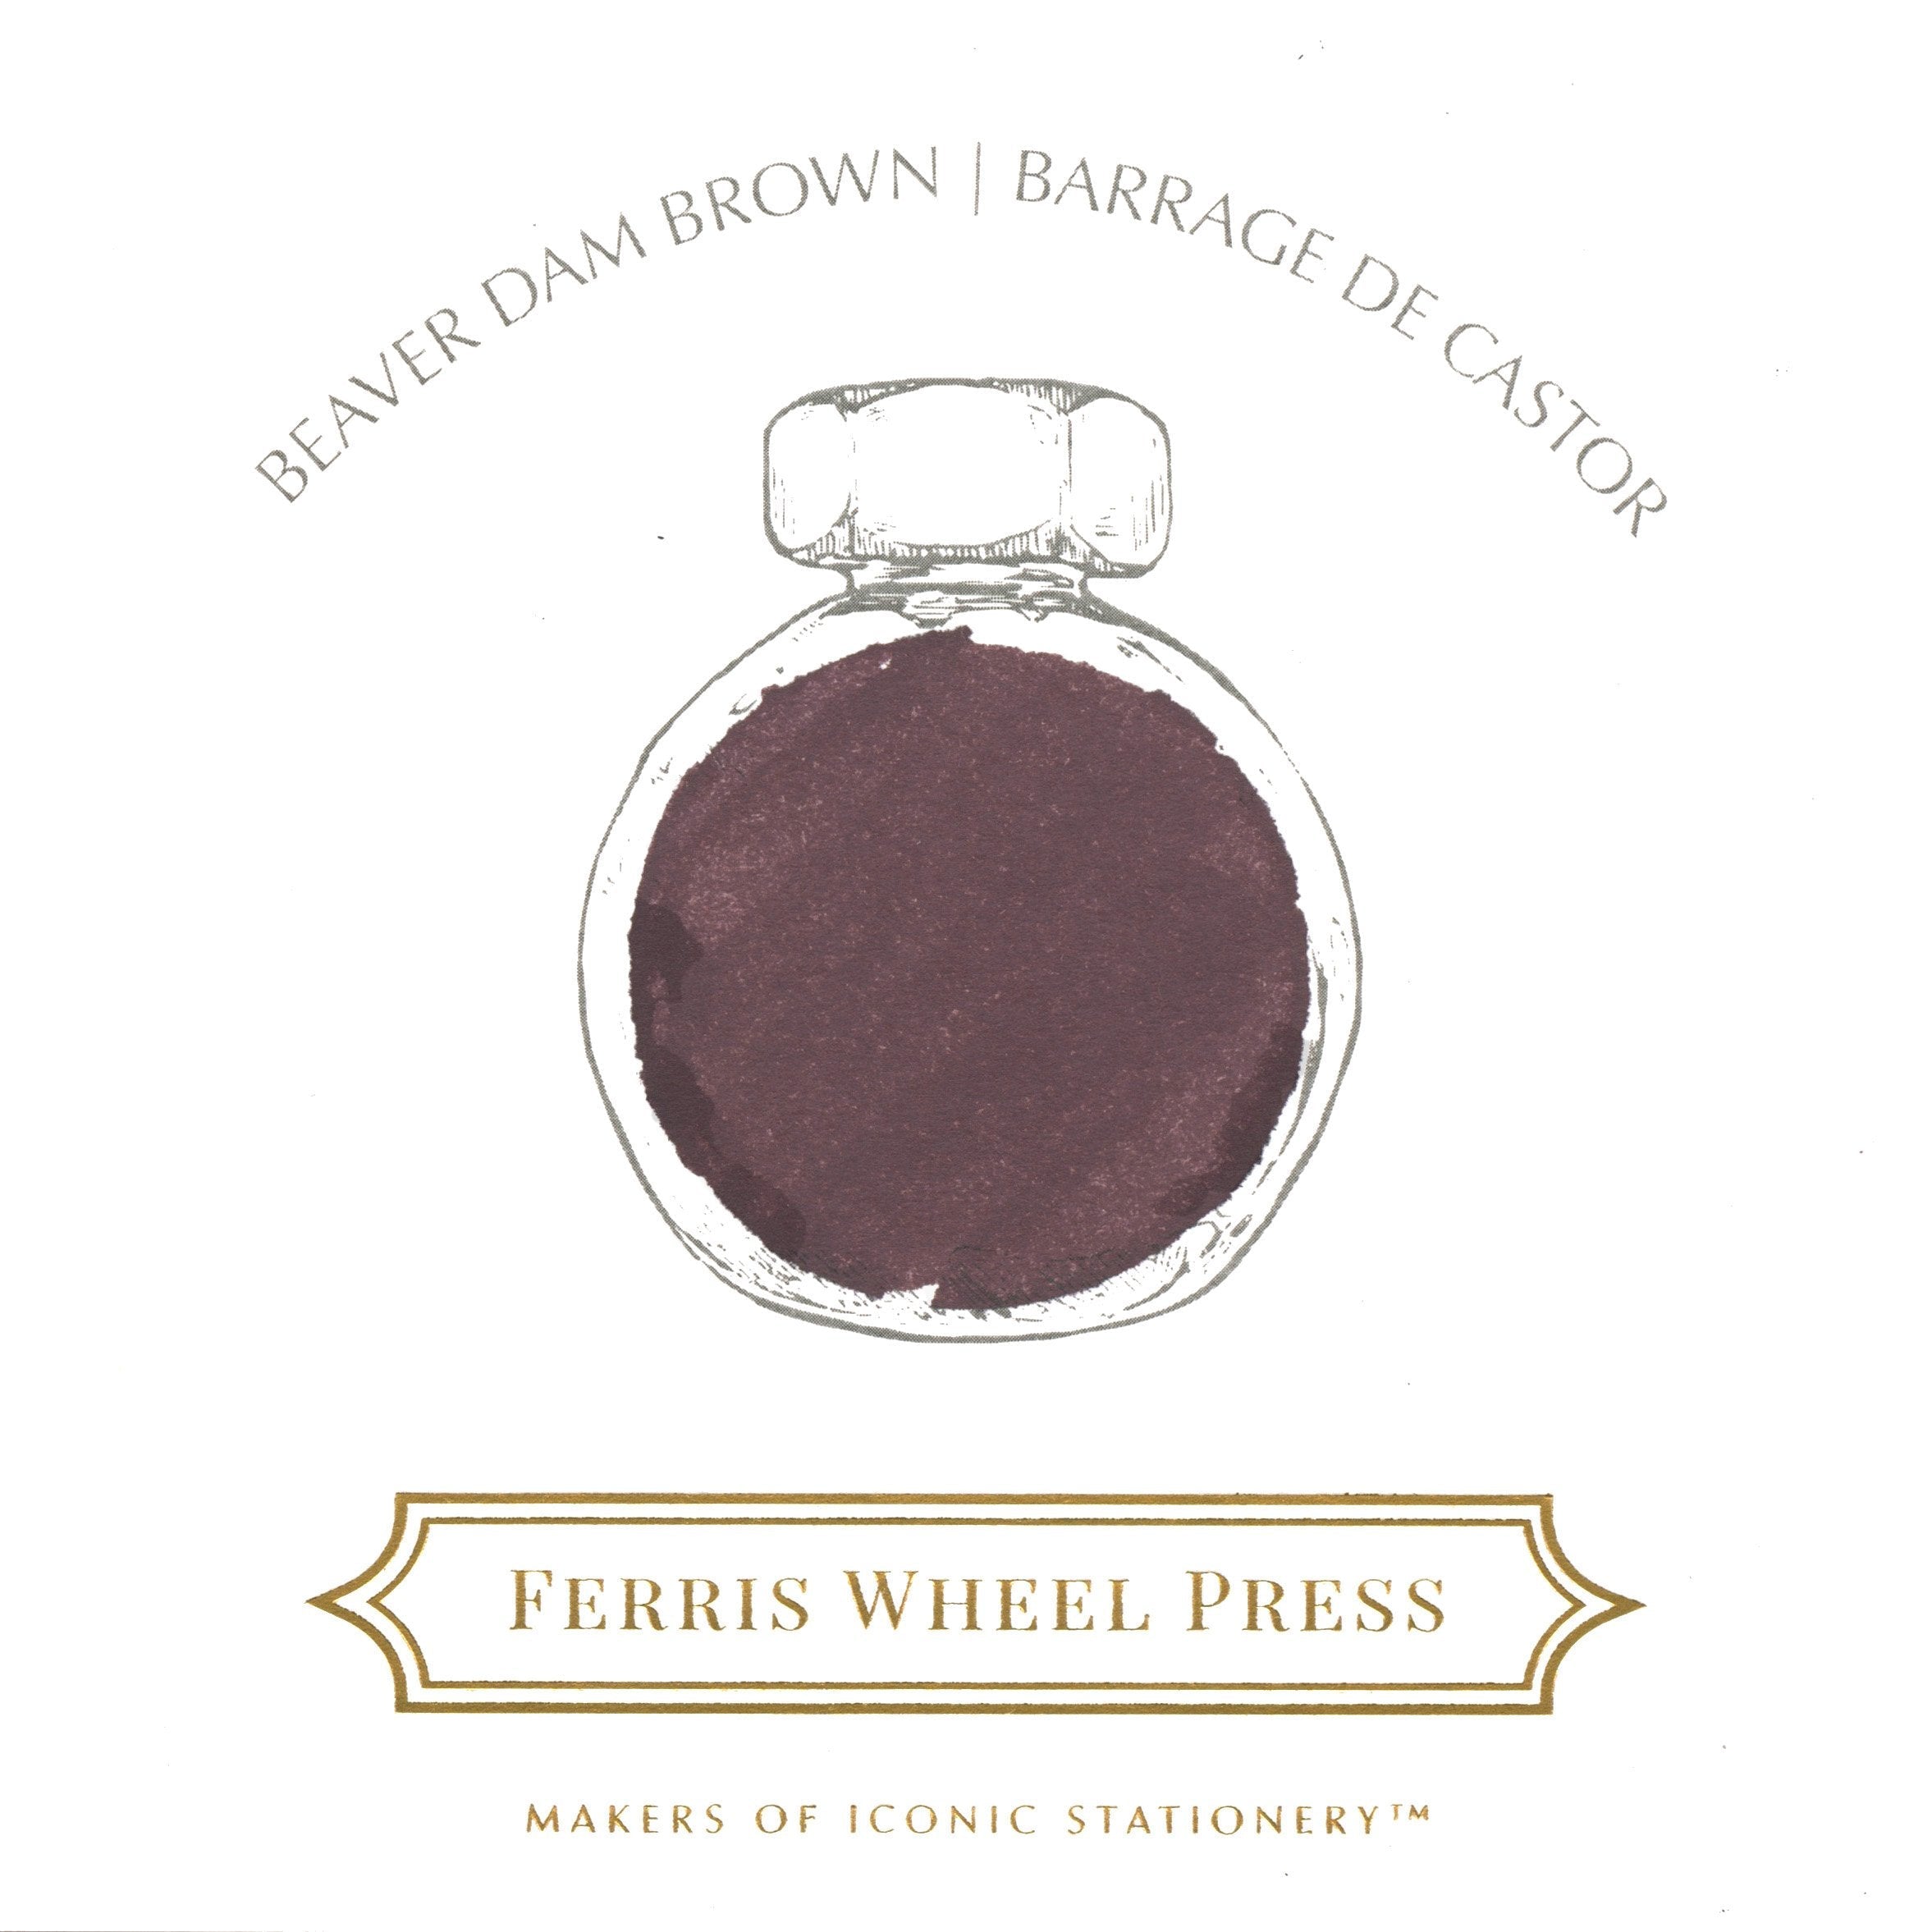 Beaver Dam Brown - Ferris Wheel Press